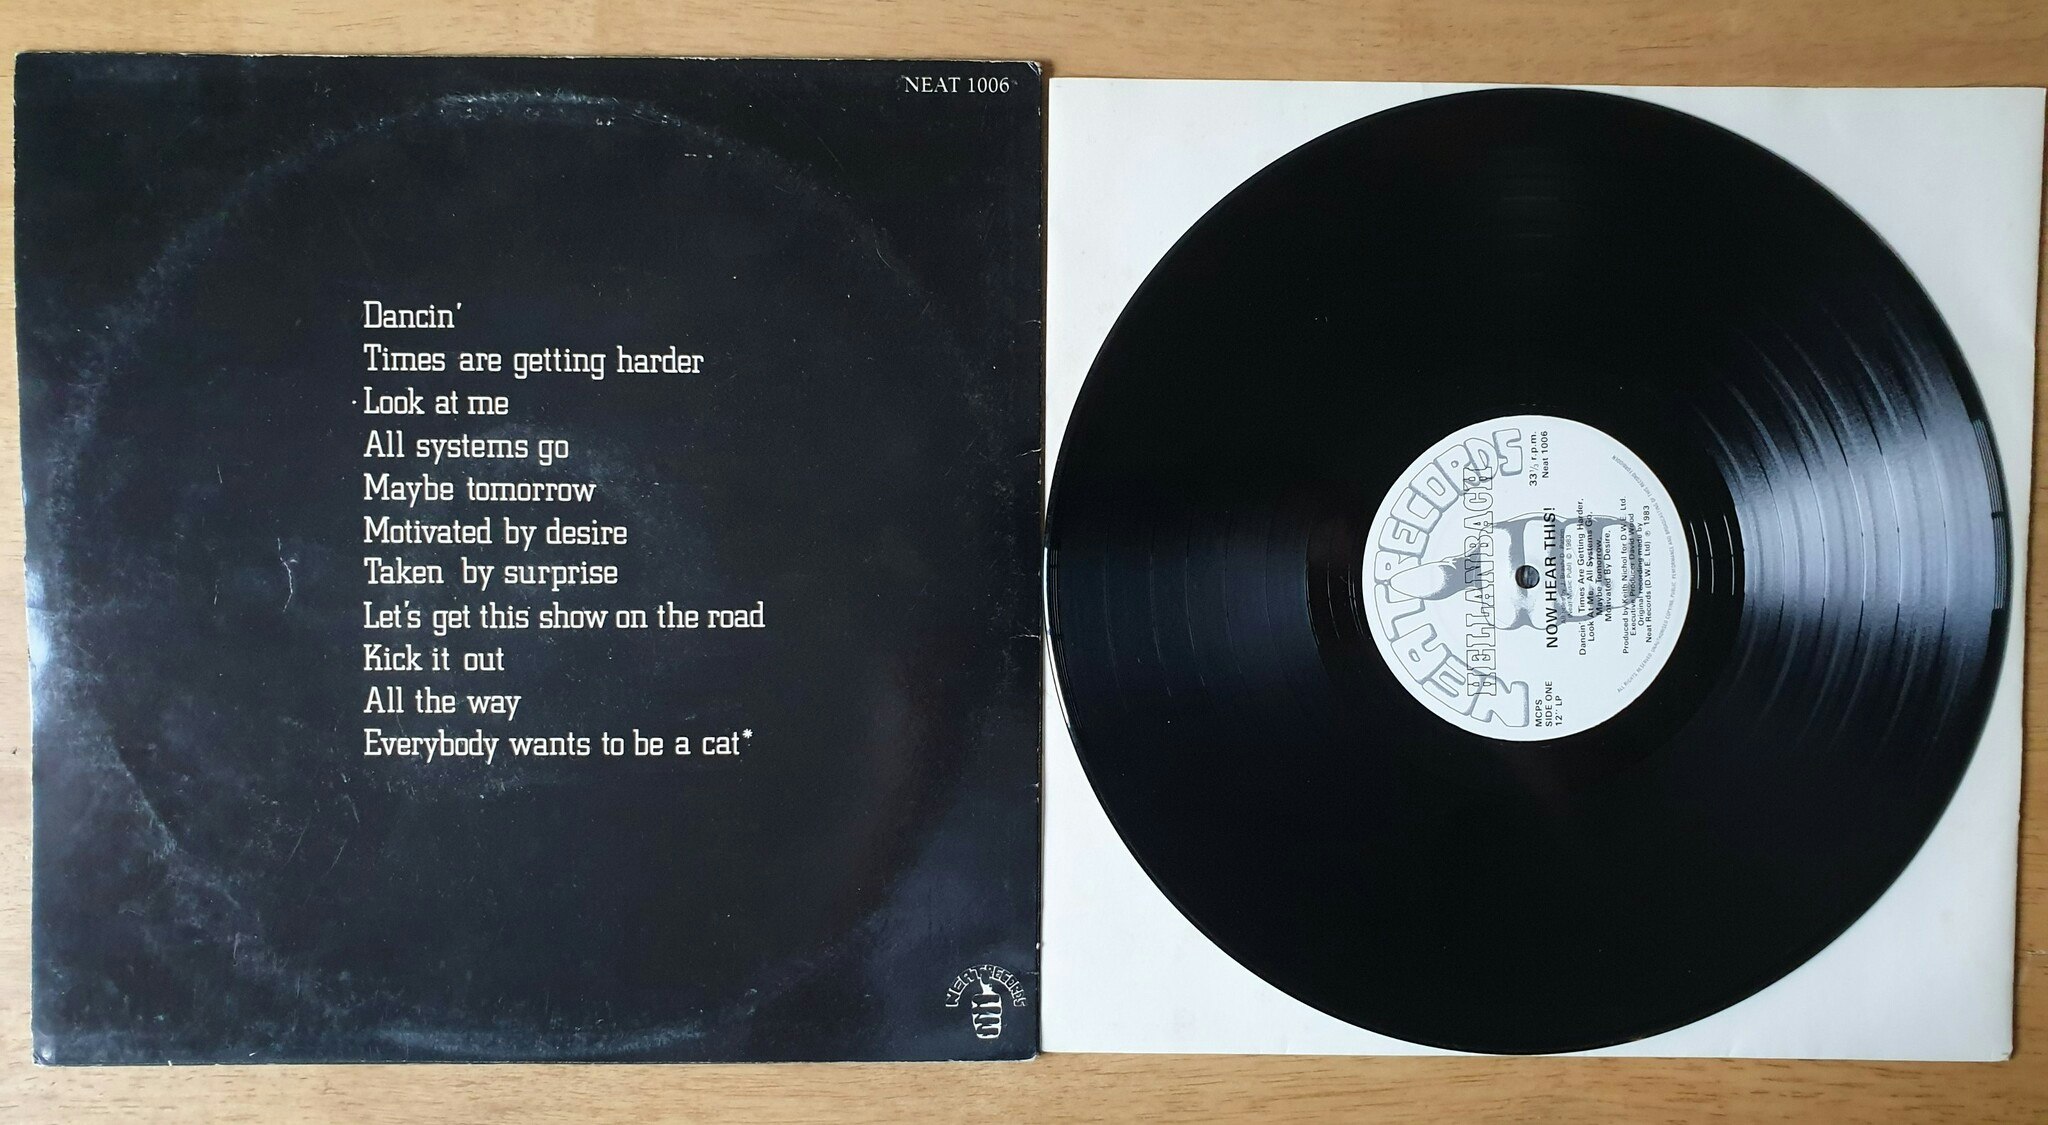 Hellanbach, Now hear this. Vinyl LP